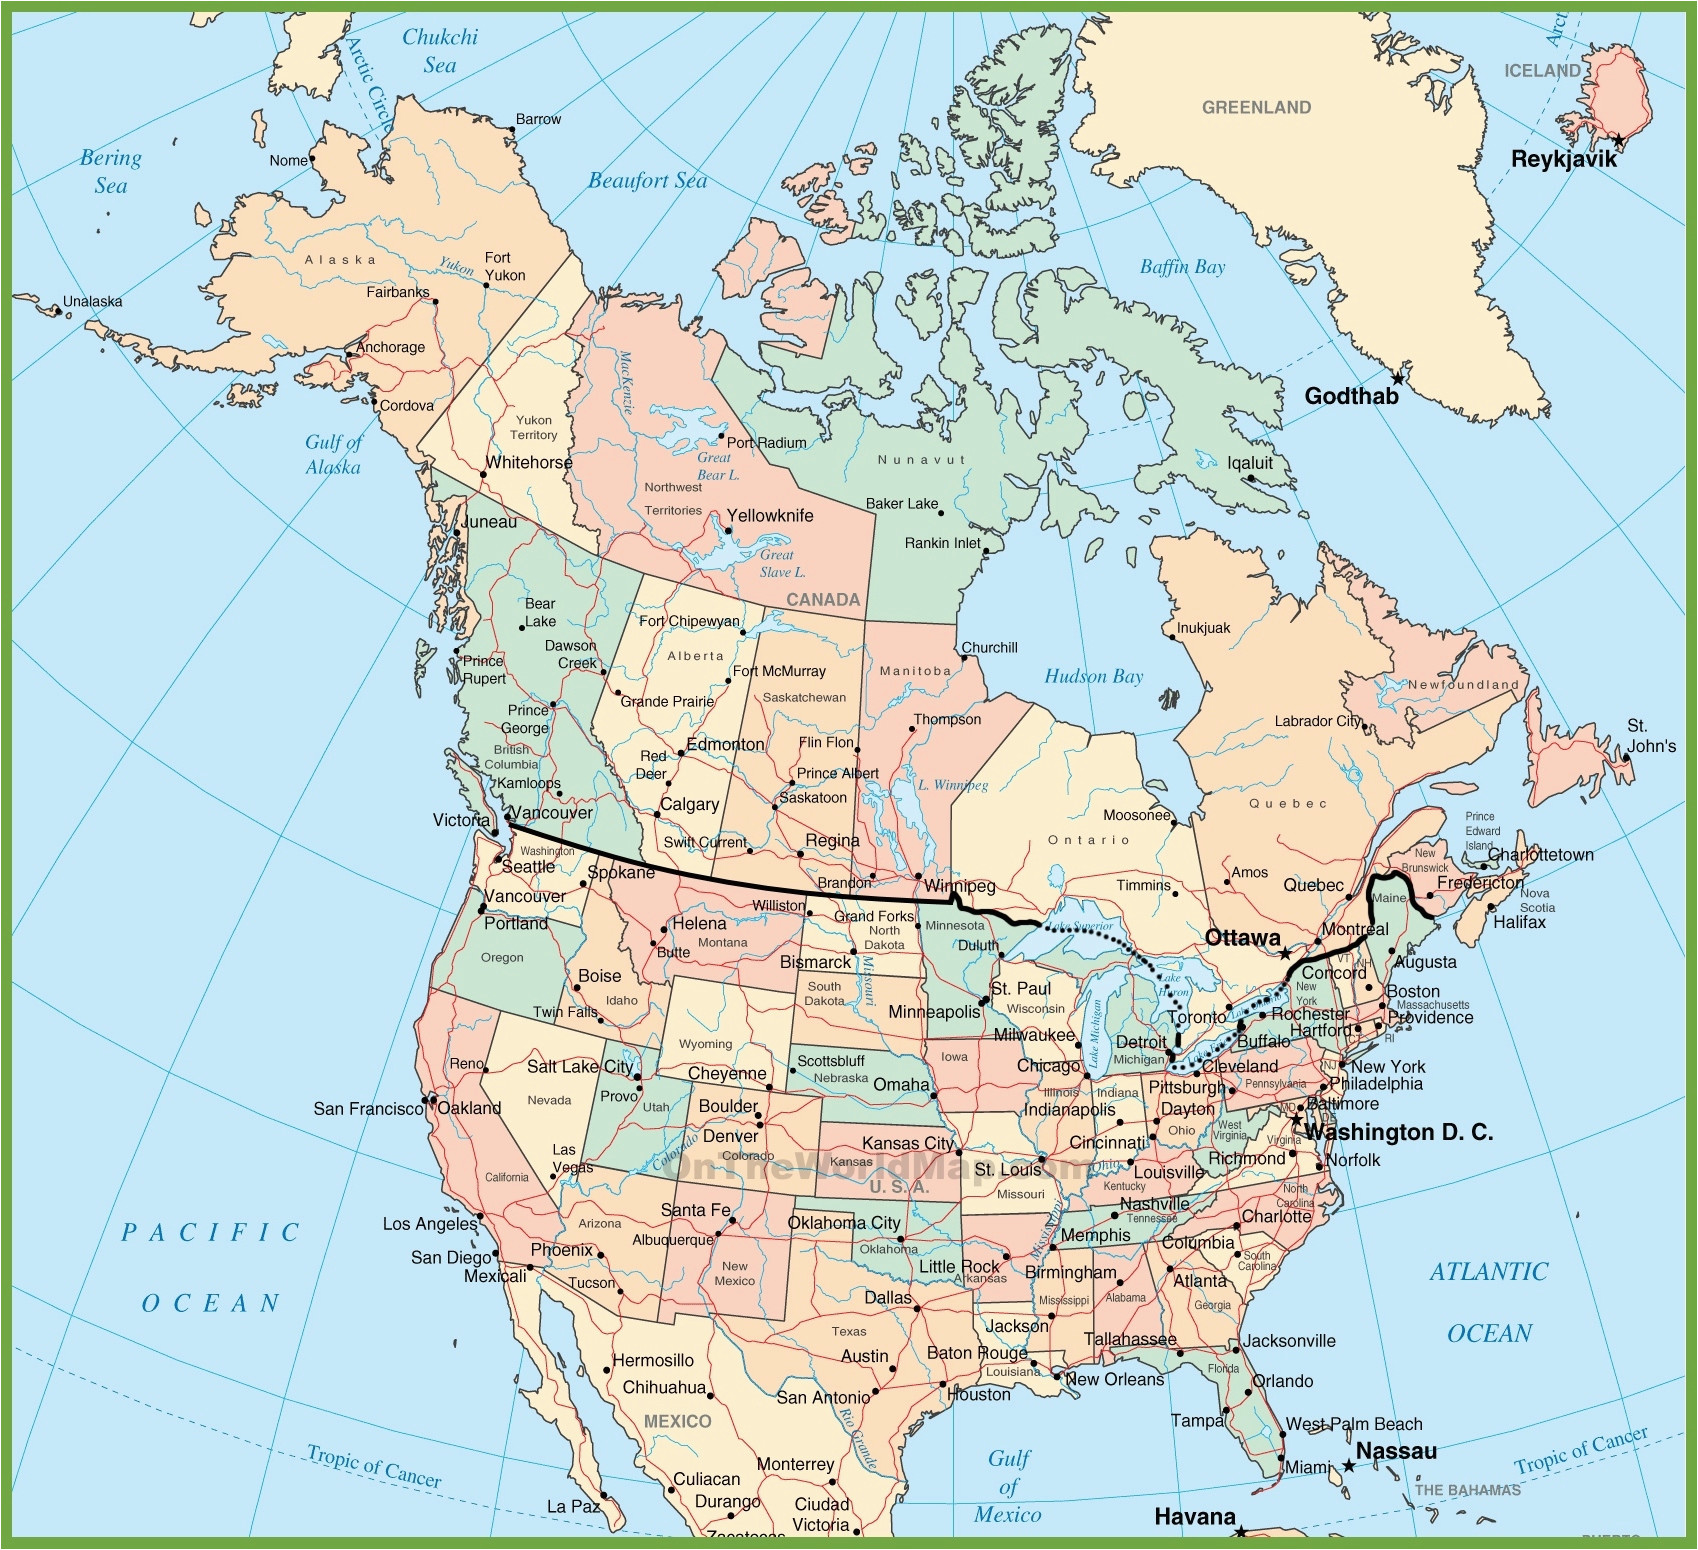 Map Of East Coast Usa and Canada Usa and Canada Map